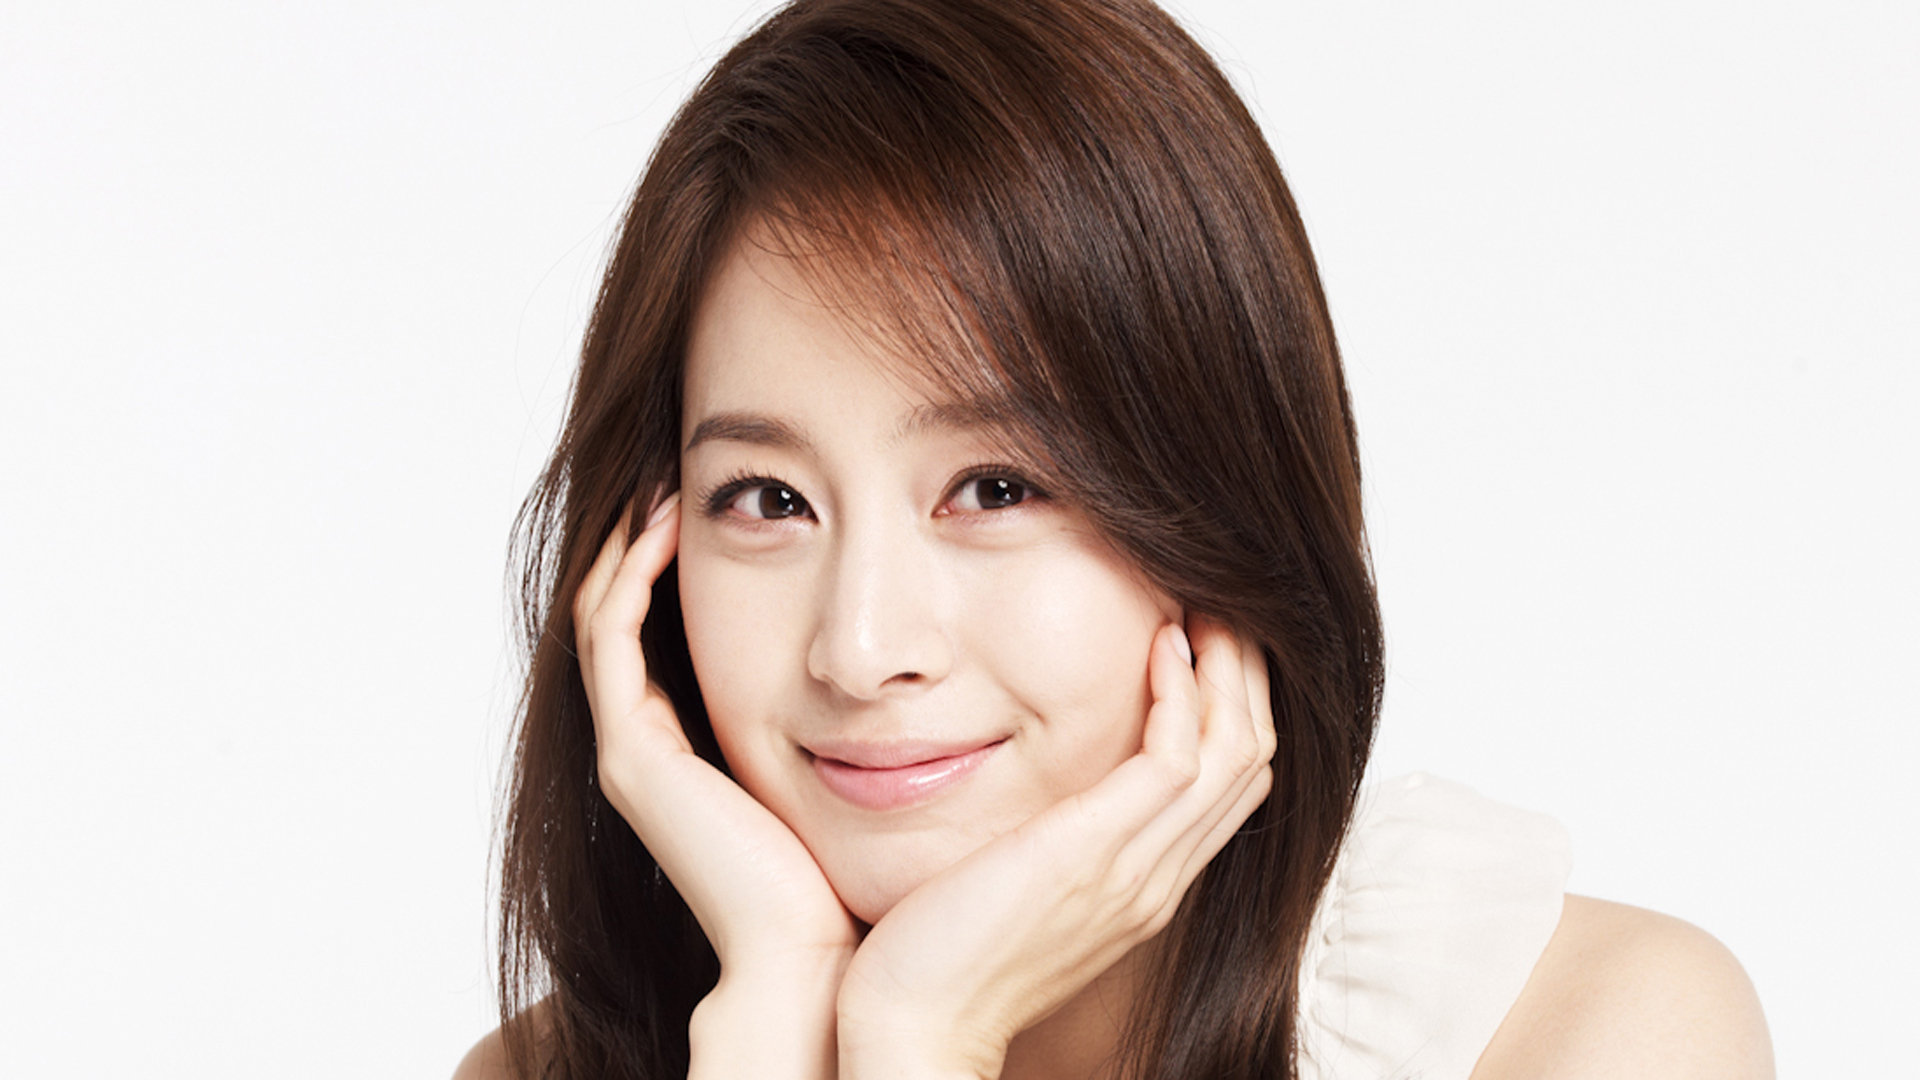 kim-tae-hee-beauty-south-korean-actress-wallpaper-desktop-photos-vls69